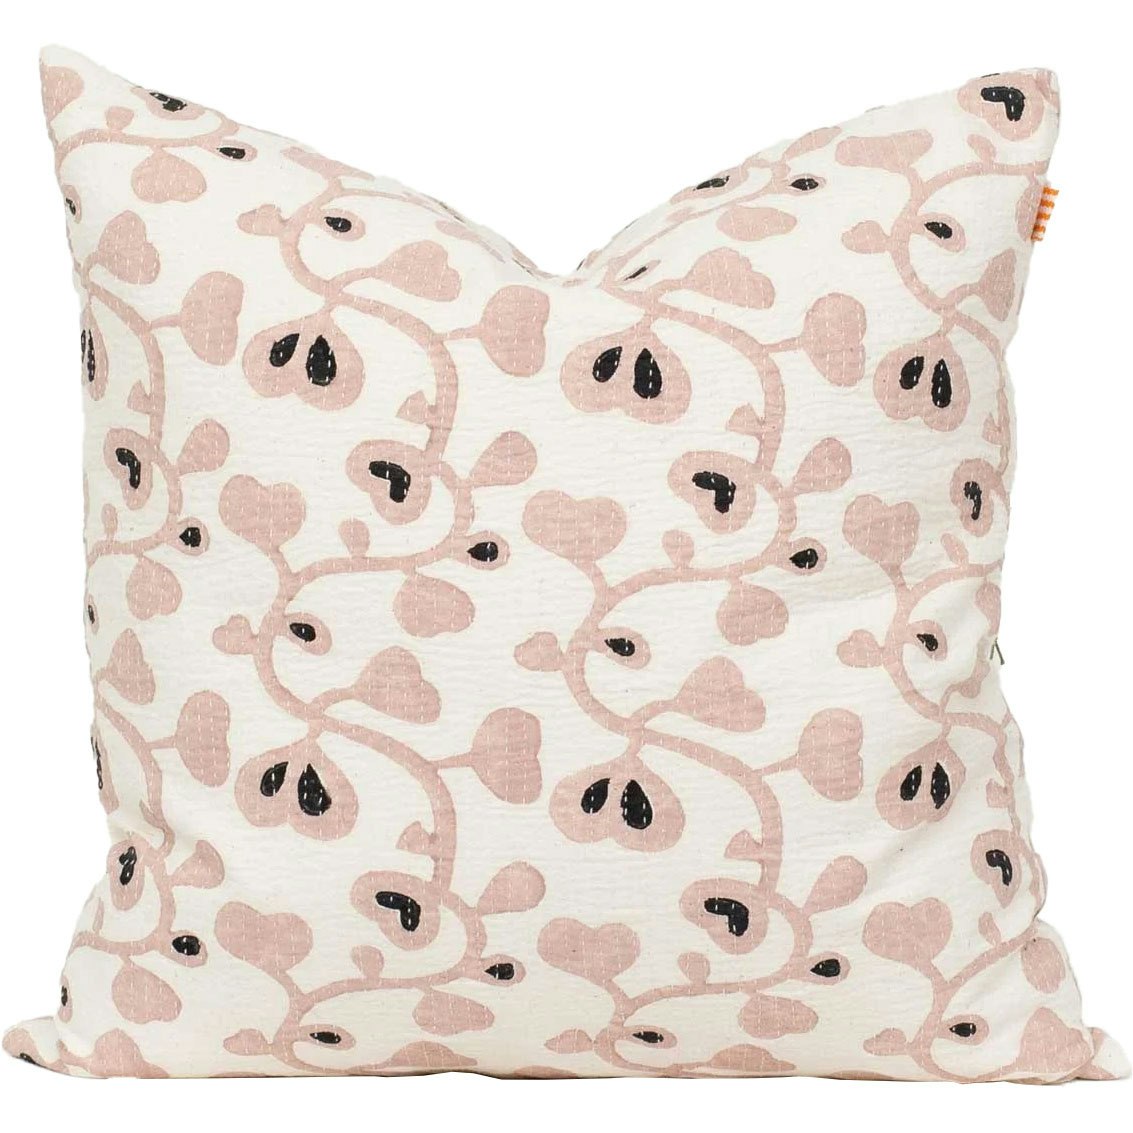 Heartflower Cushion Cover 50x50 cm, Pink